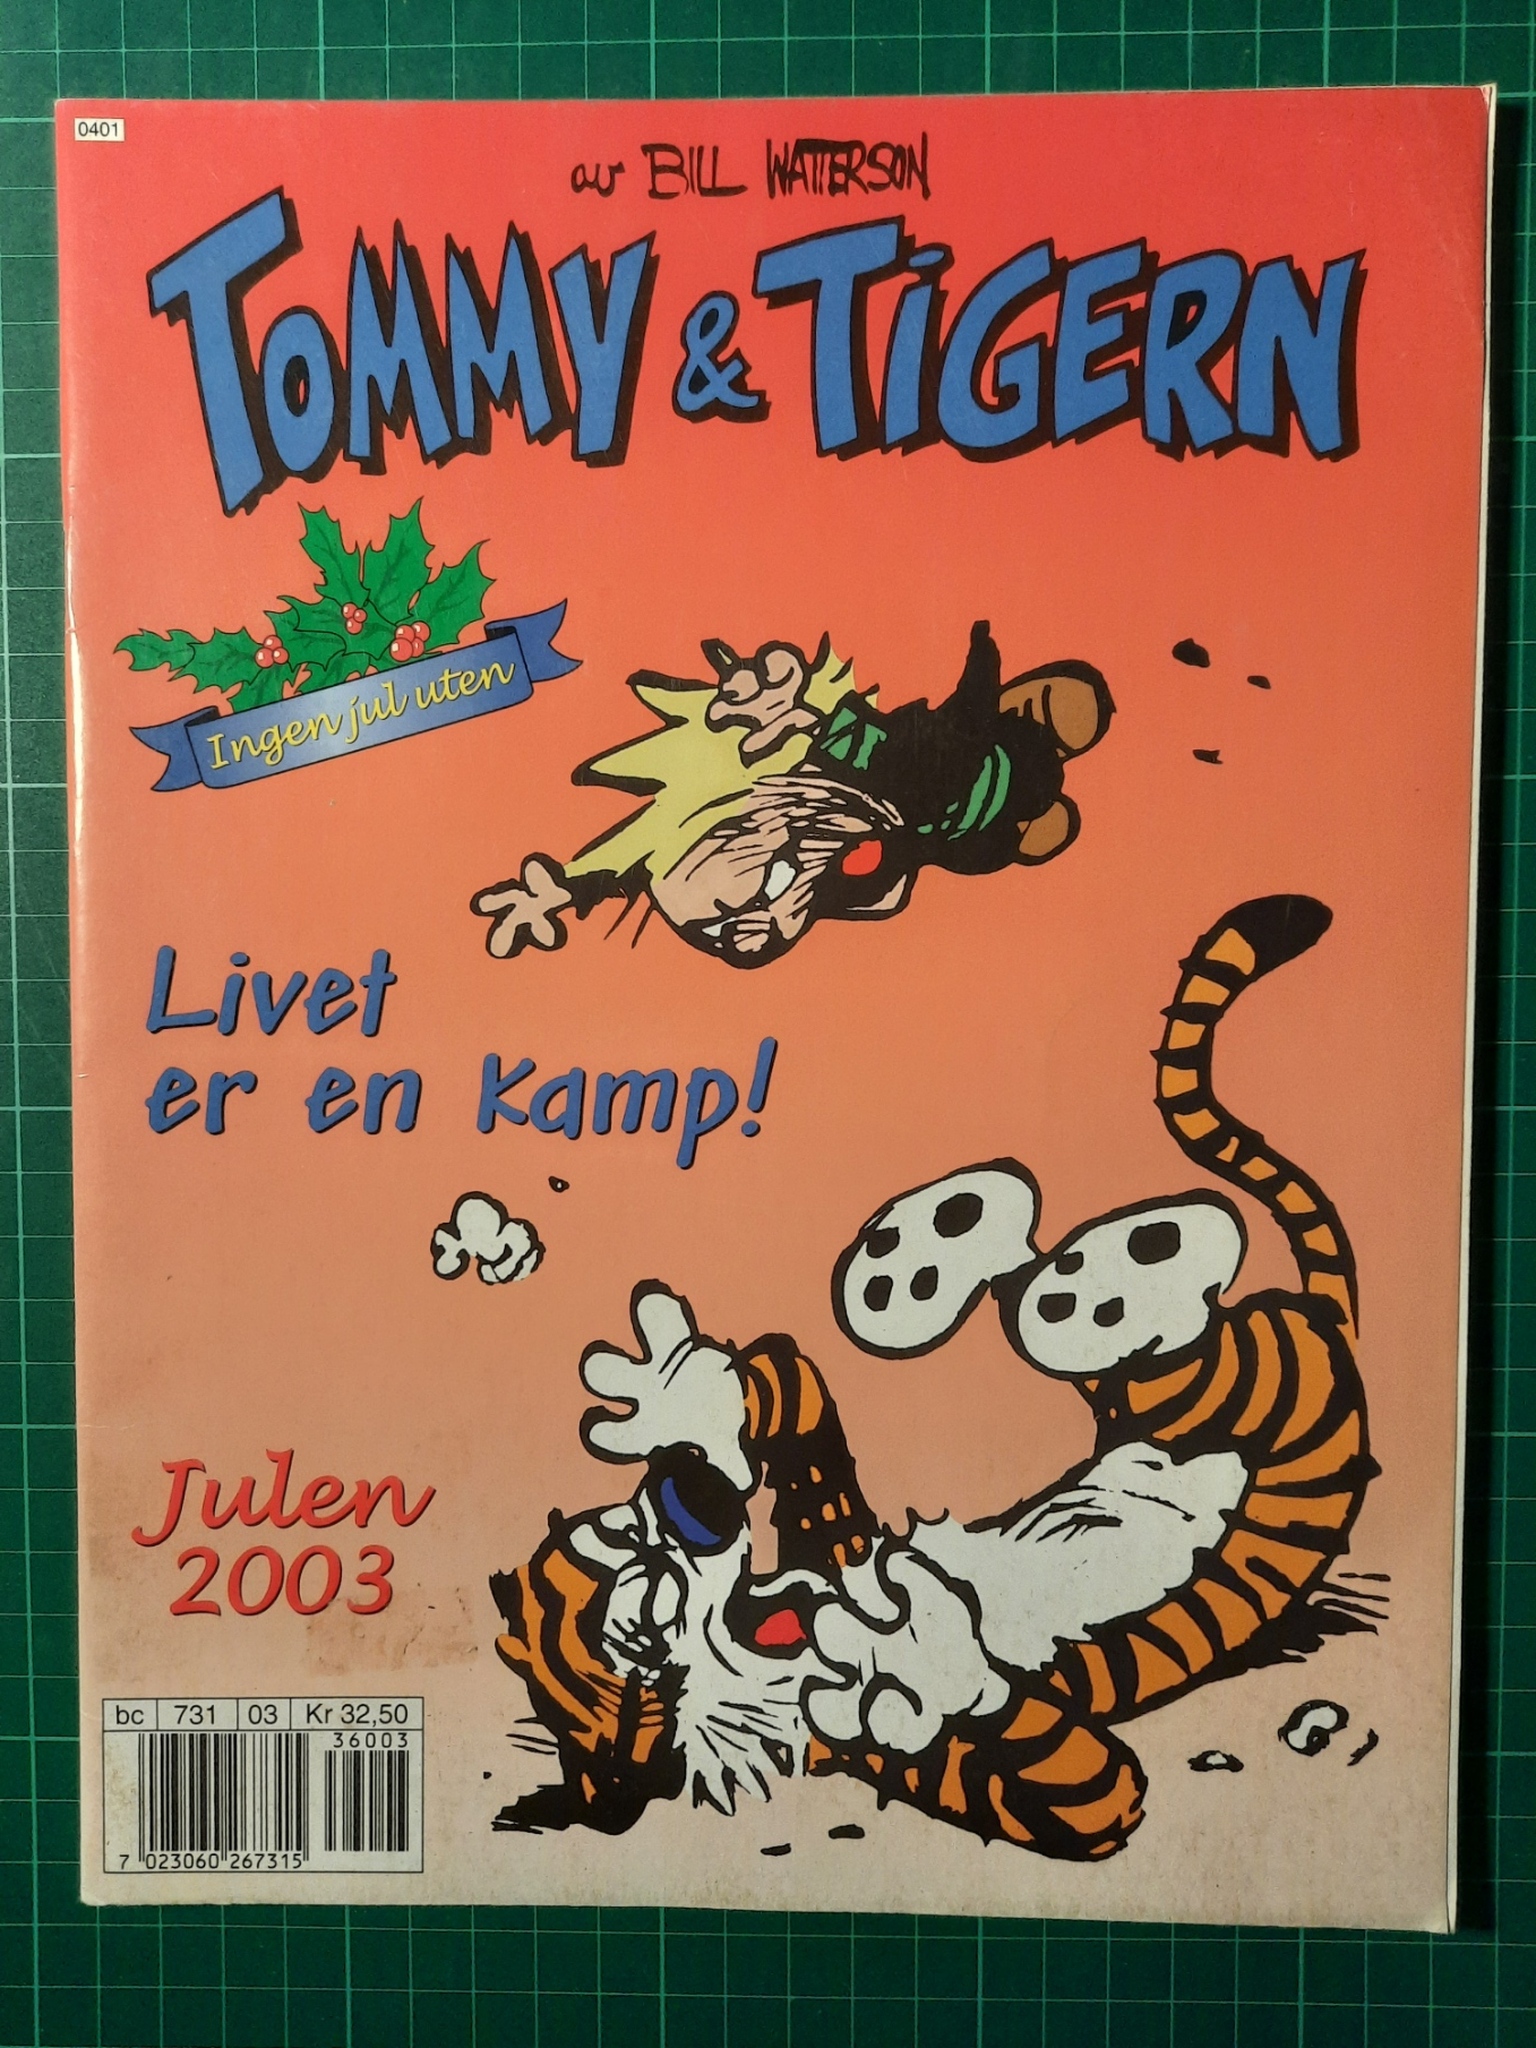 Tommy & Tigern julen 2003